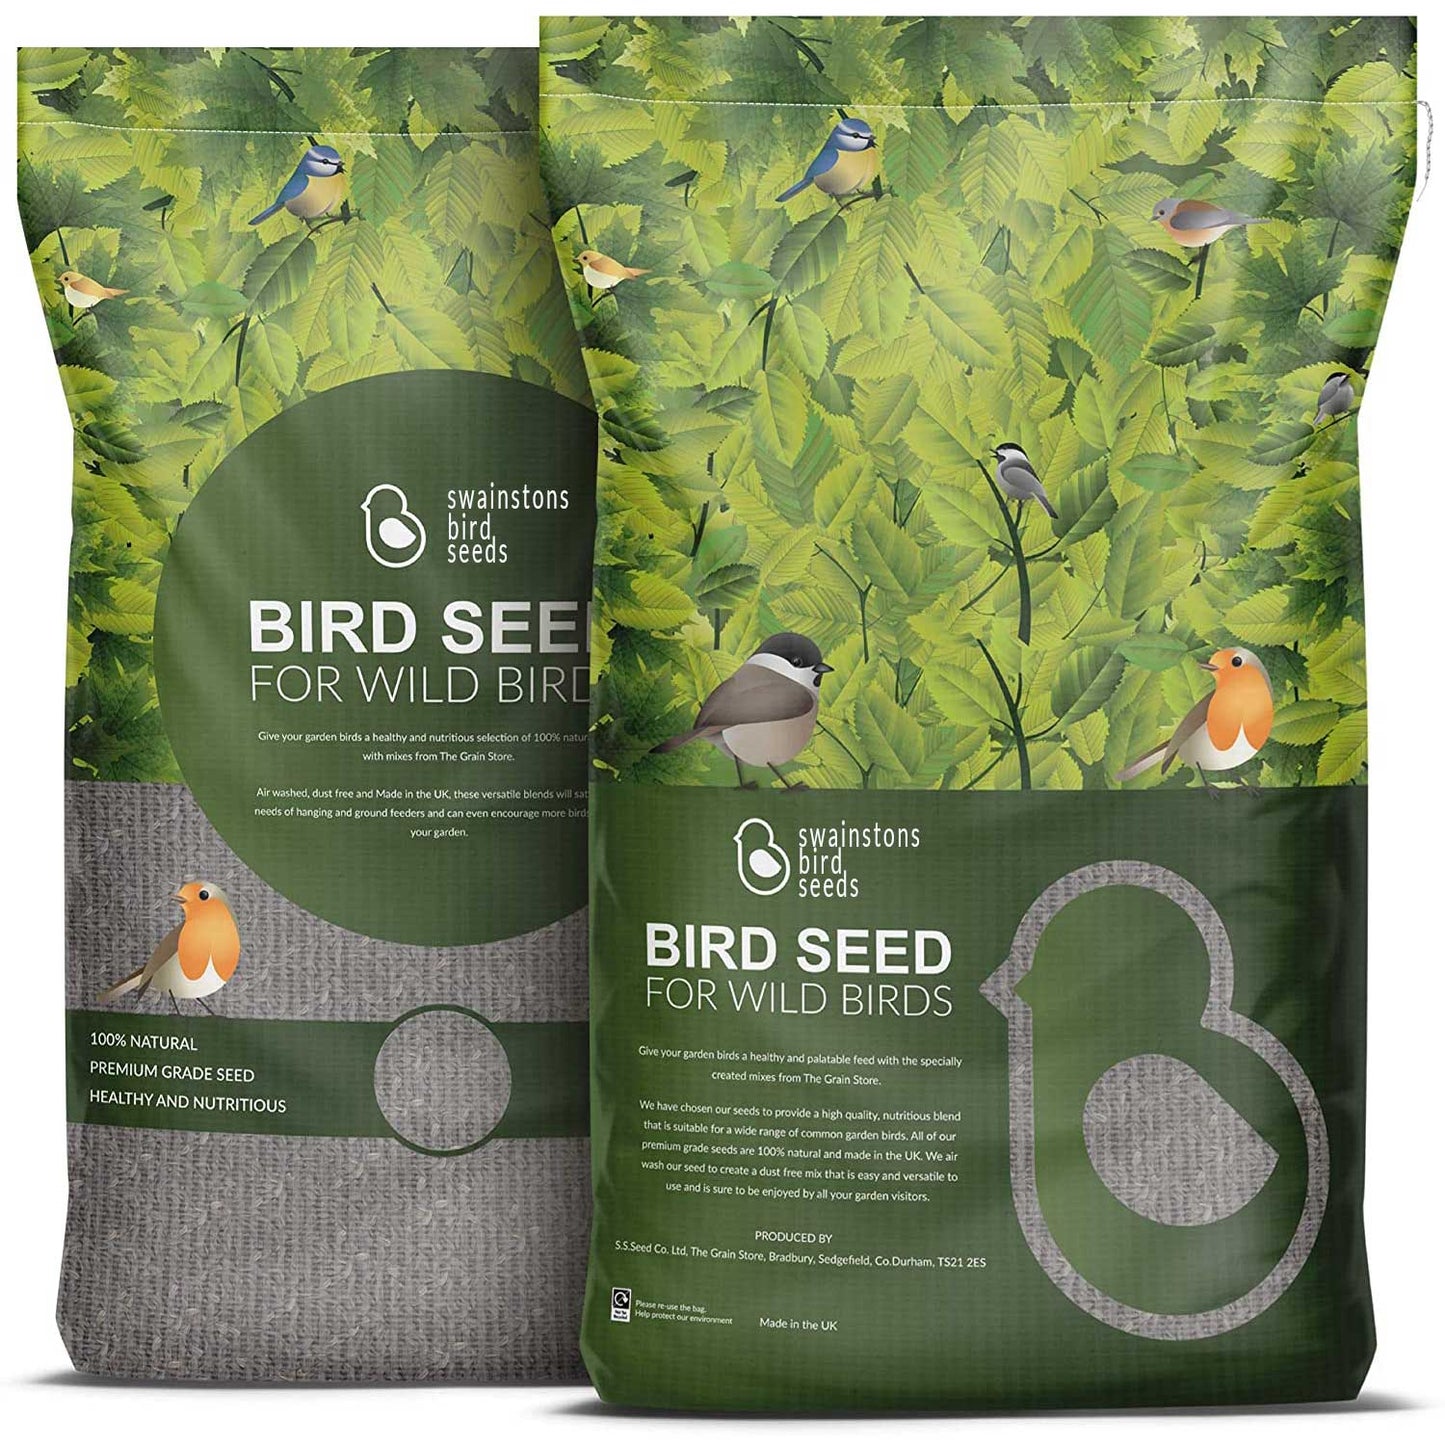 sunflower seeds for wild birds for sale